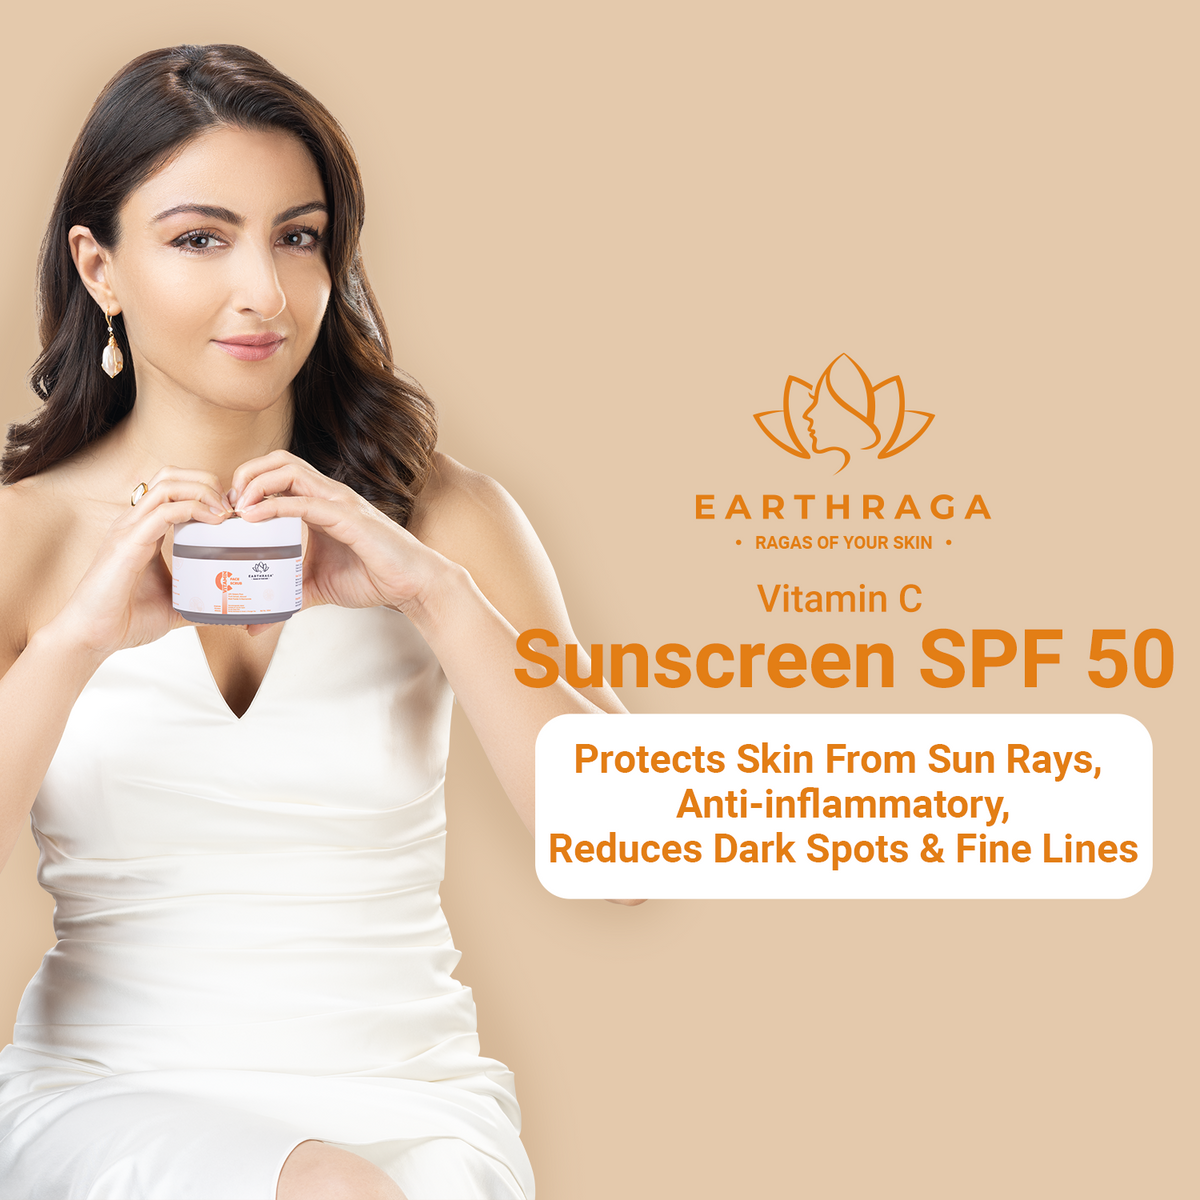 Vitamin C Sunscreen SPF 50 Matte | 100gm